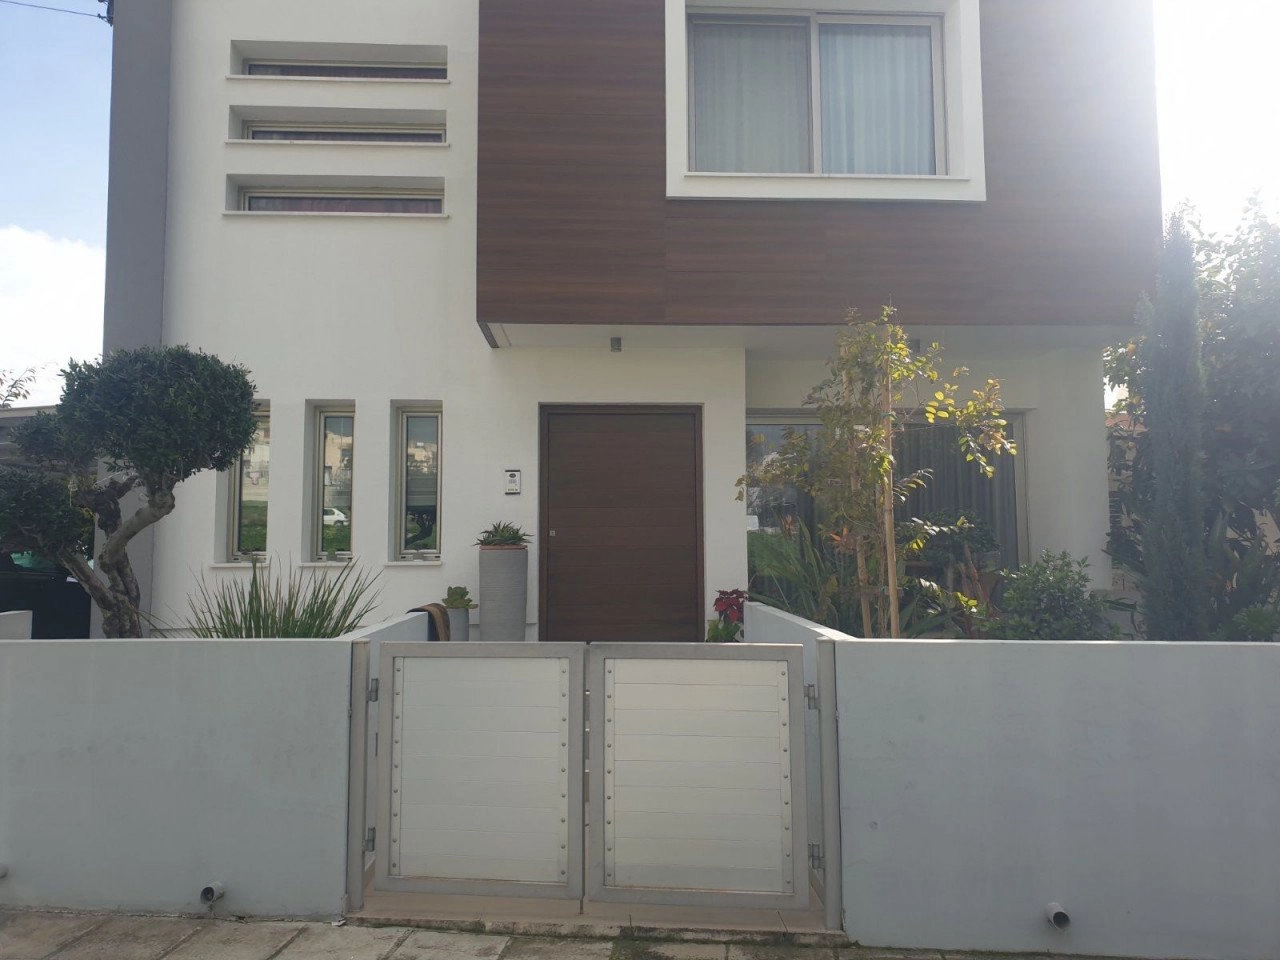 4 Bedroom House for Sale in Limassol – Kapsalos